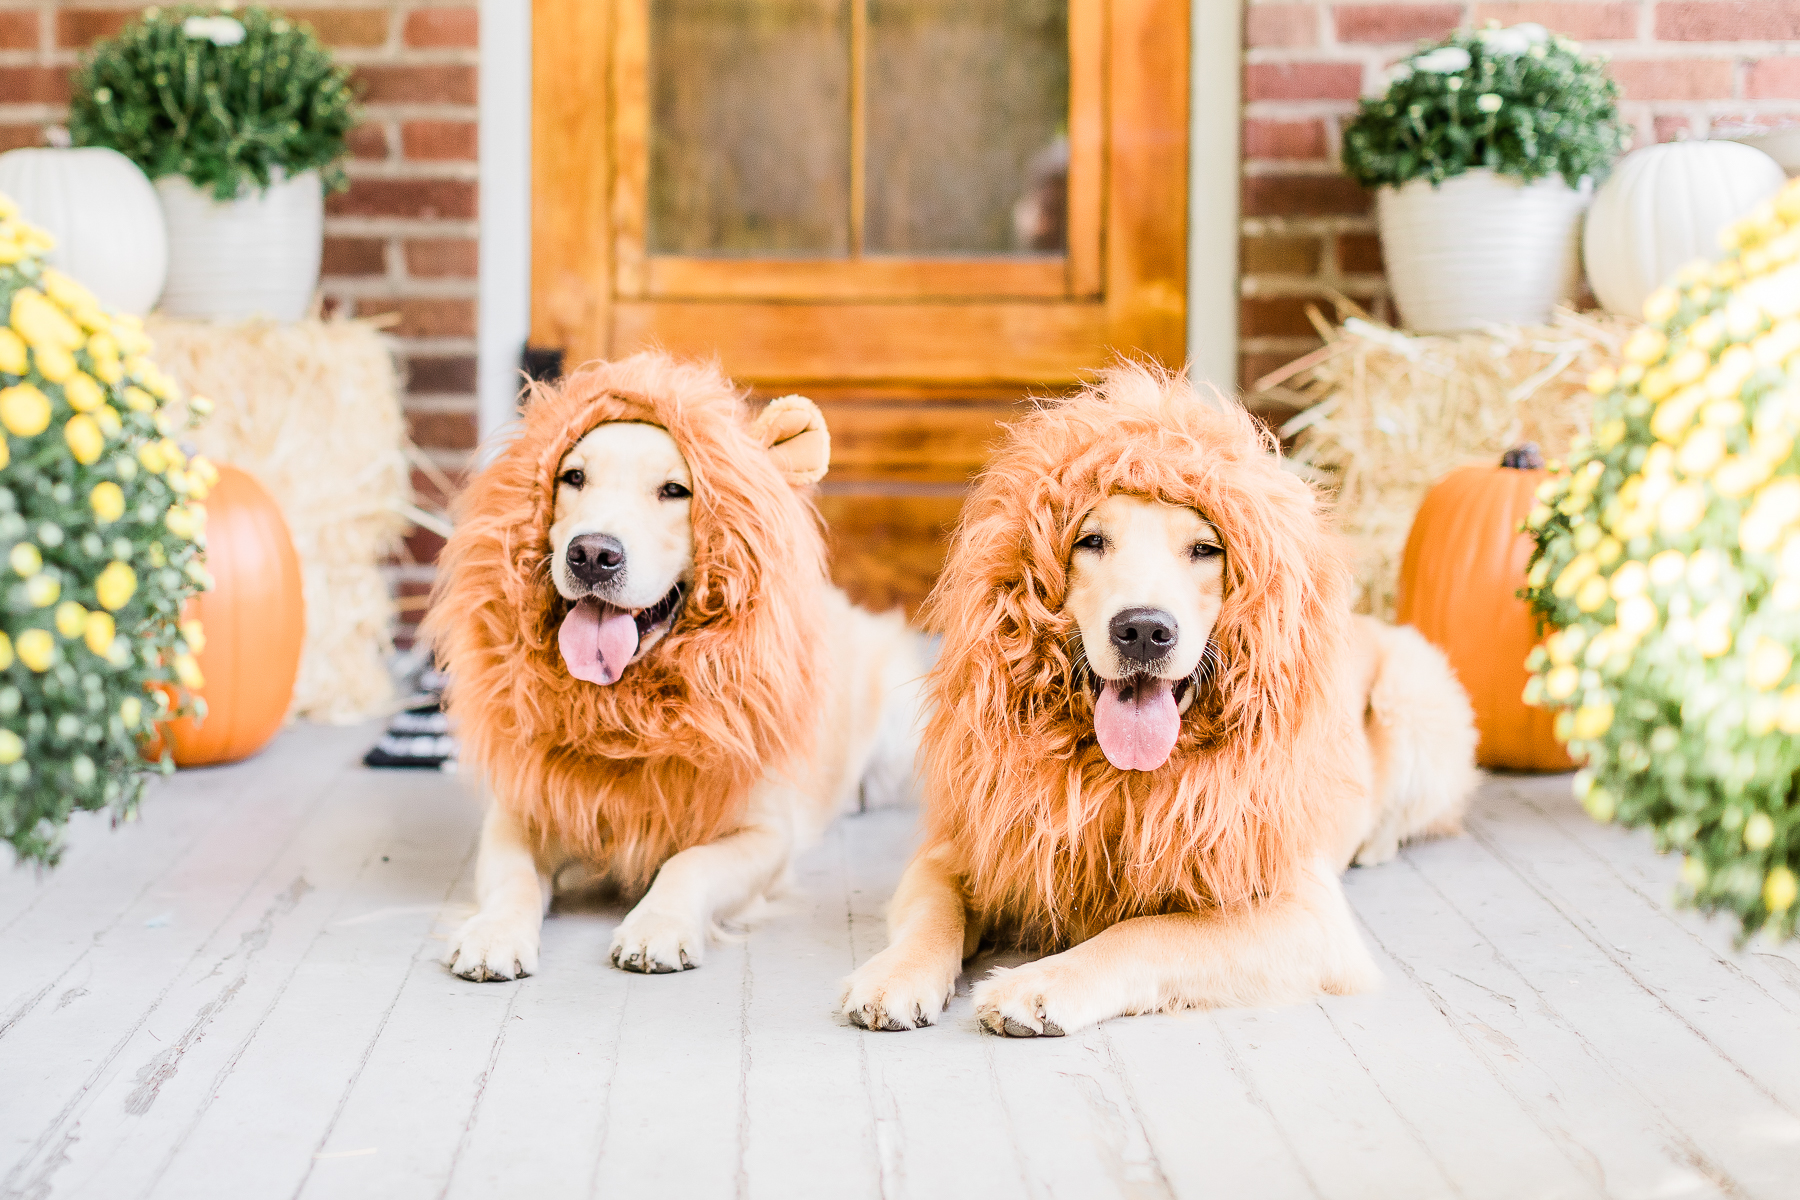 Dog lion mane costume, golden retriever lion mane costume, cute dog costumes